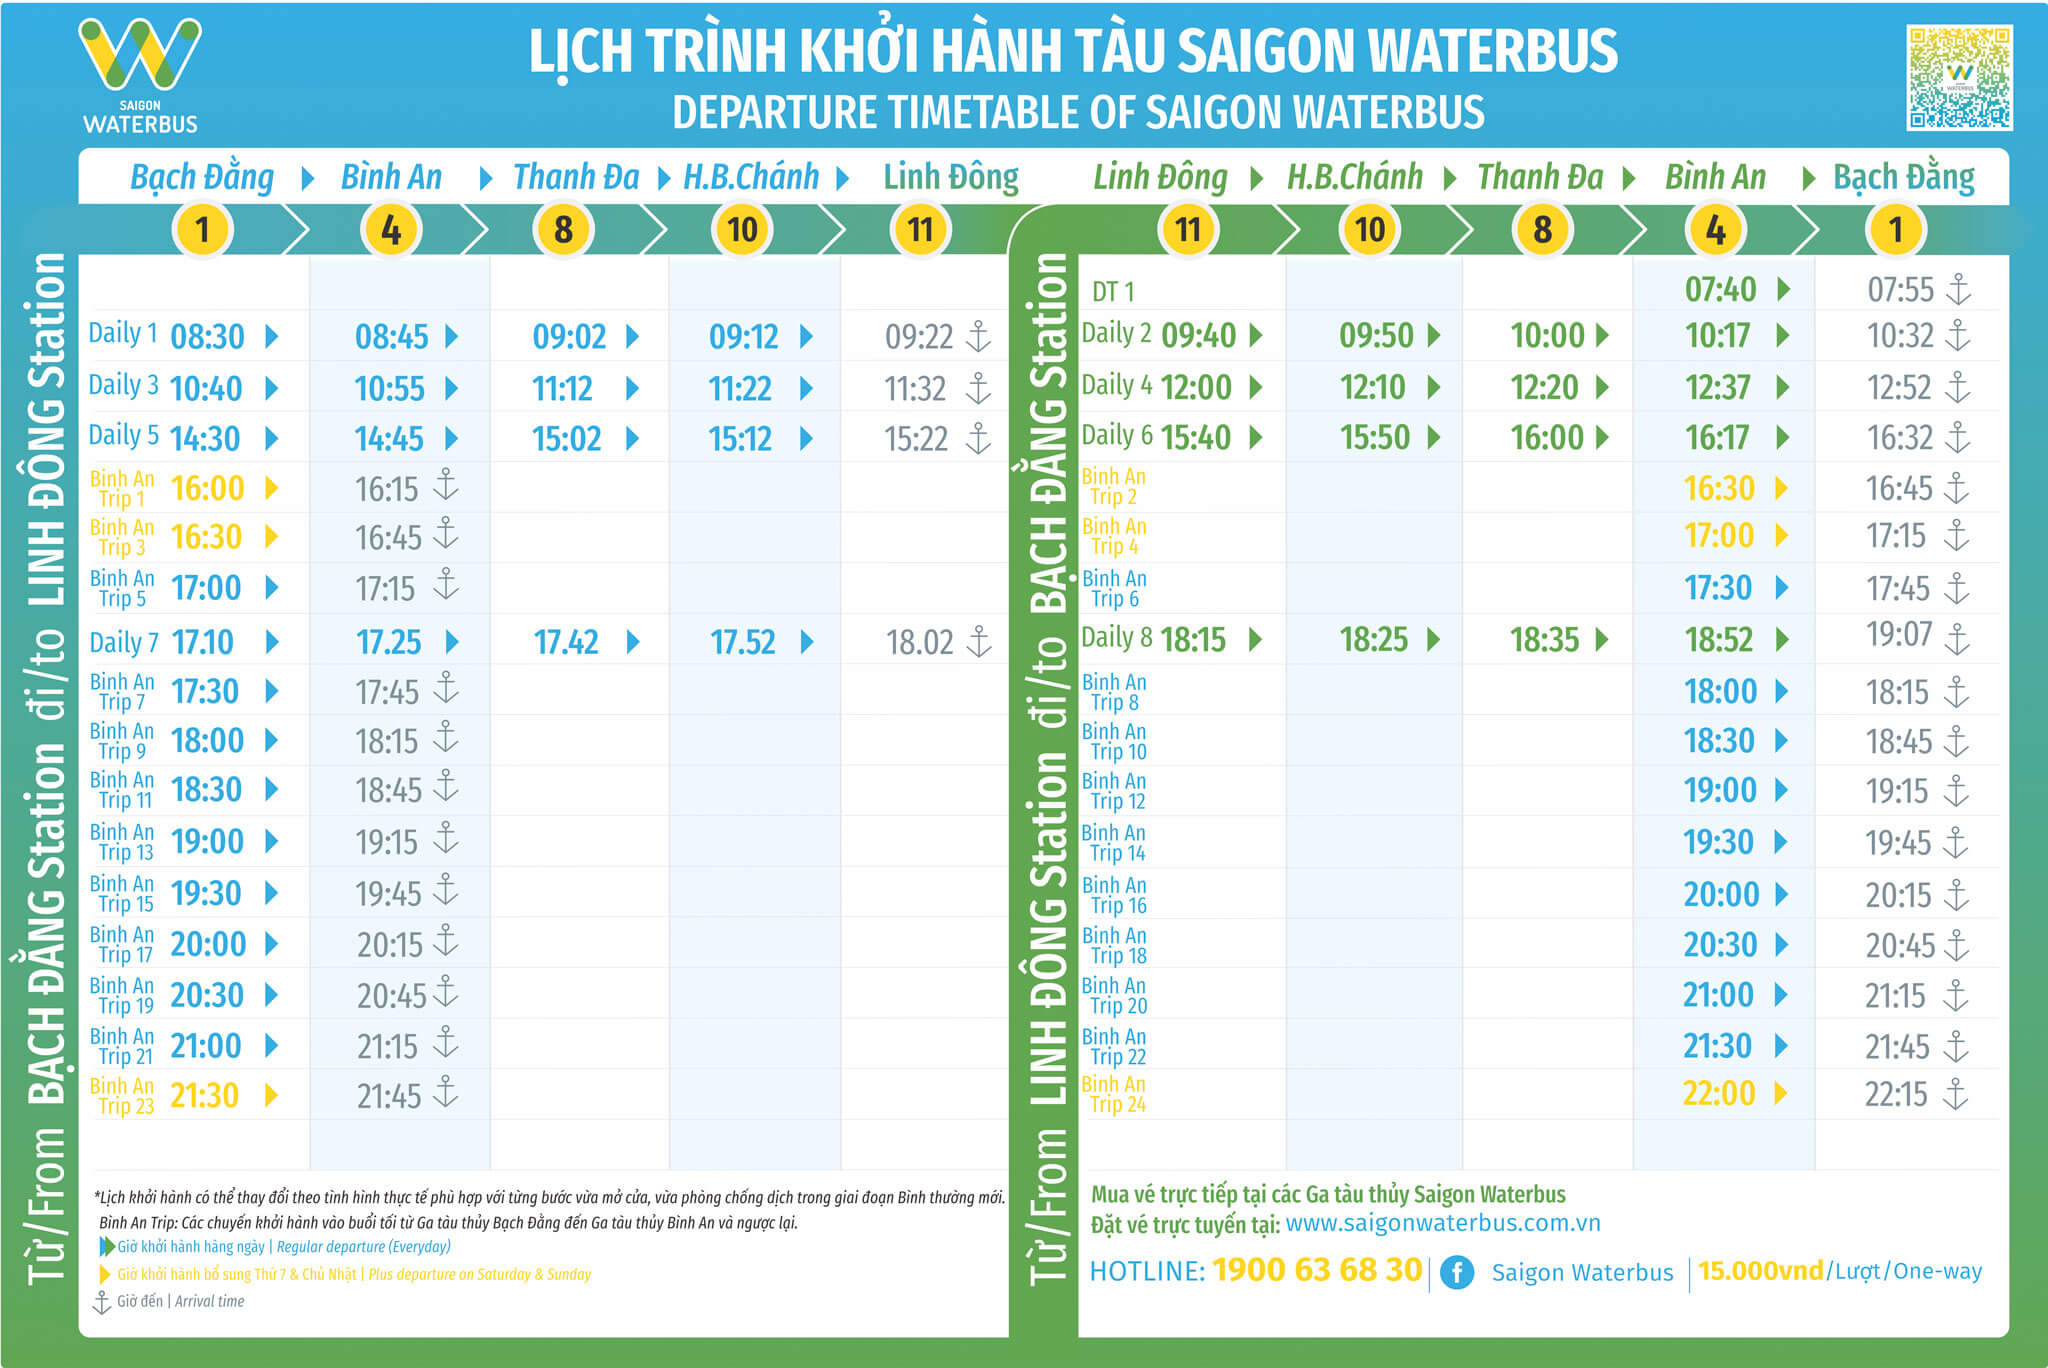 train water bus schedule